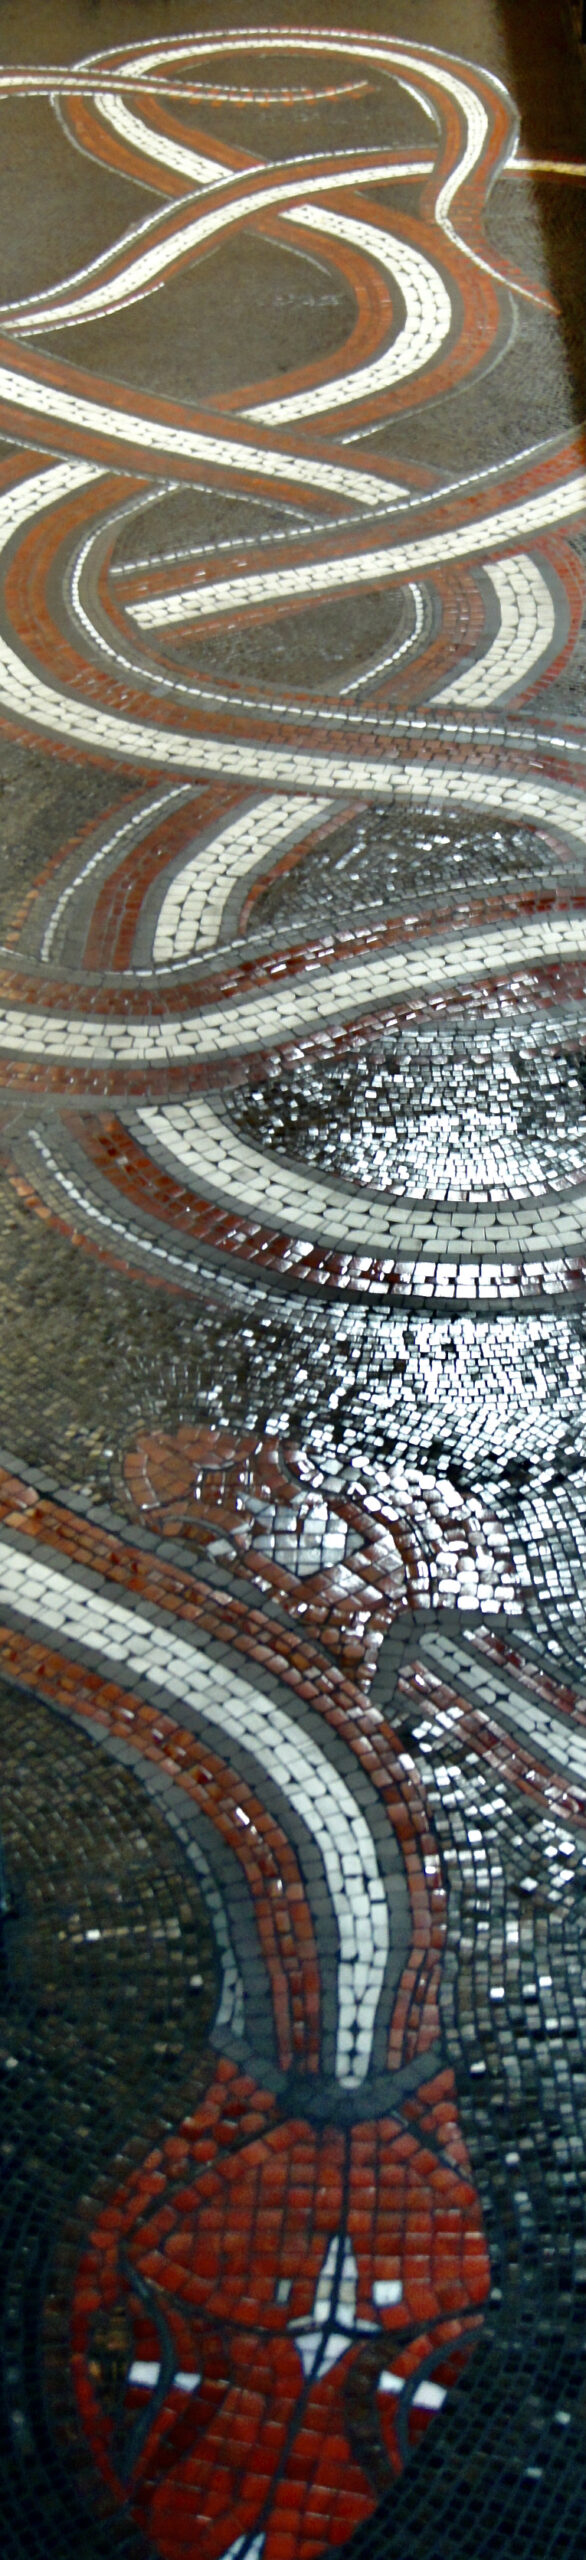 Snake Pit mosaic floor, Mayfair London